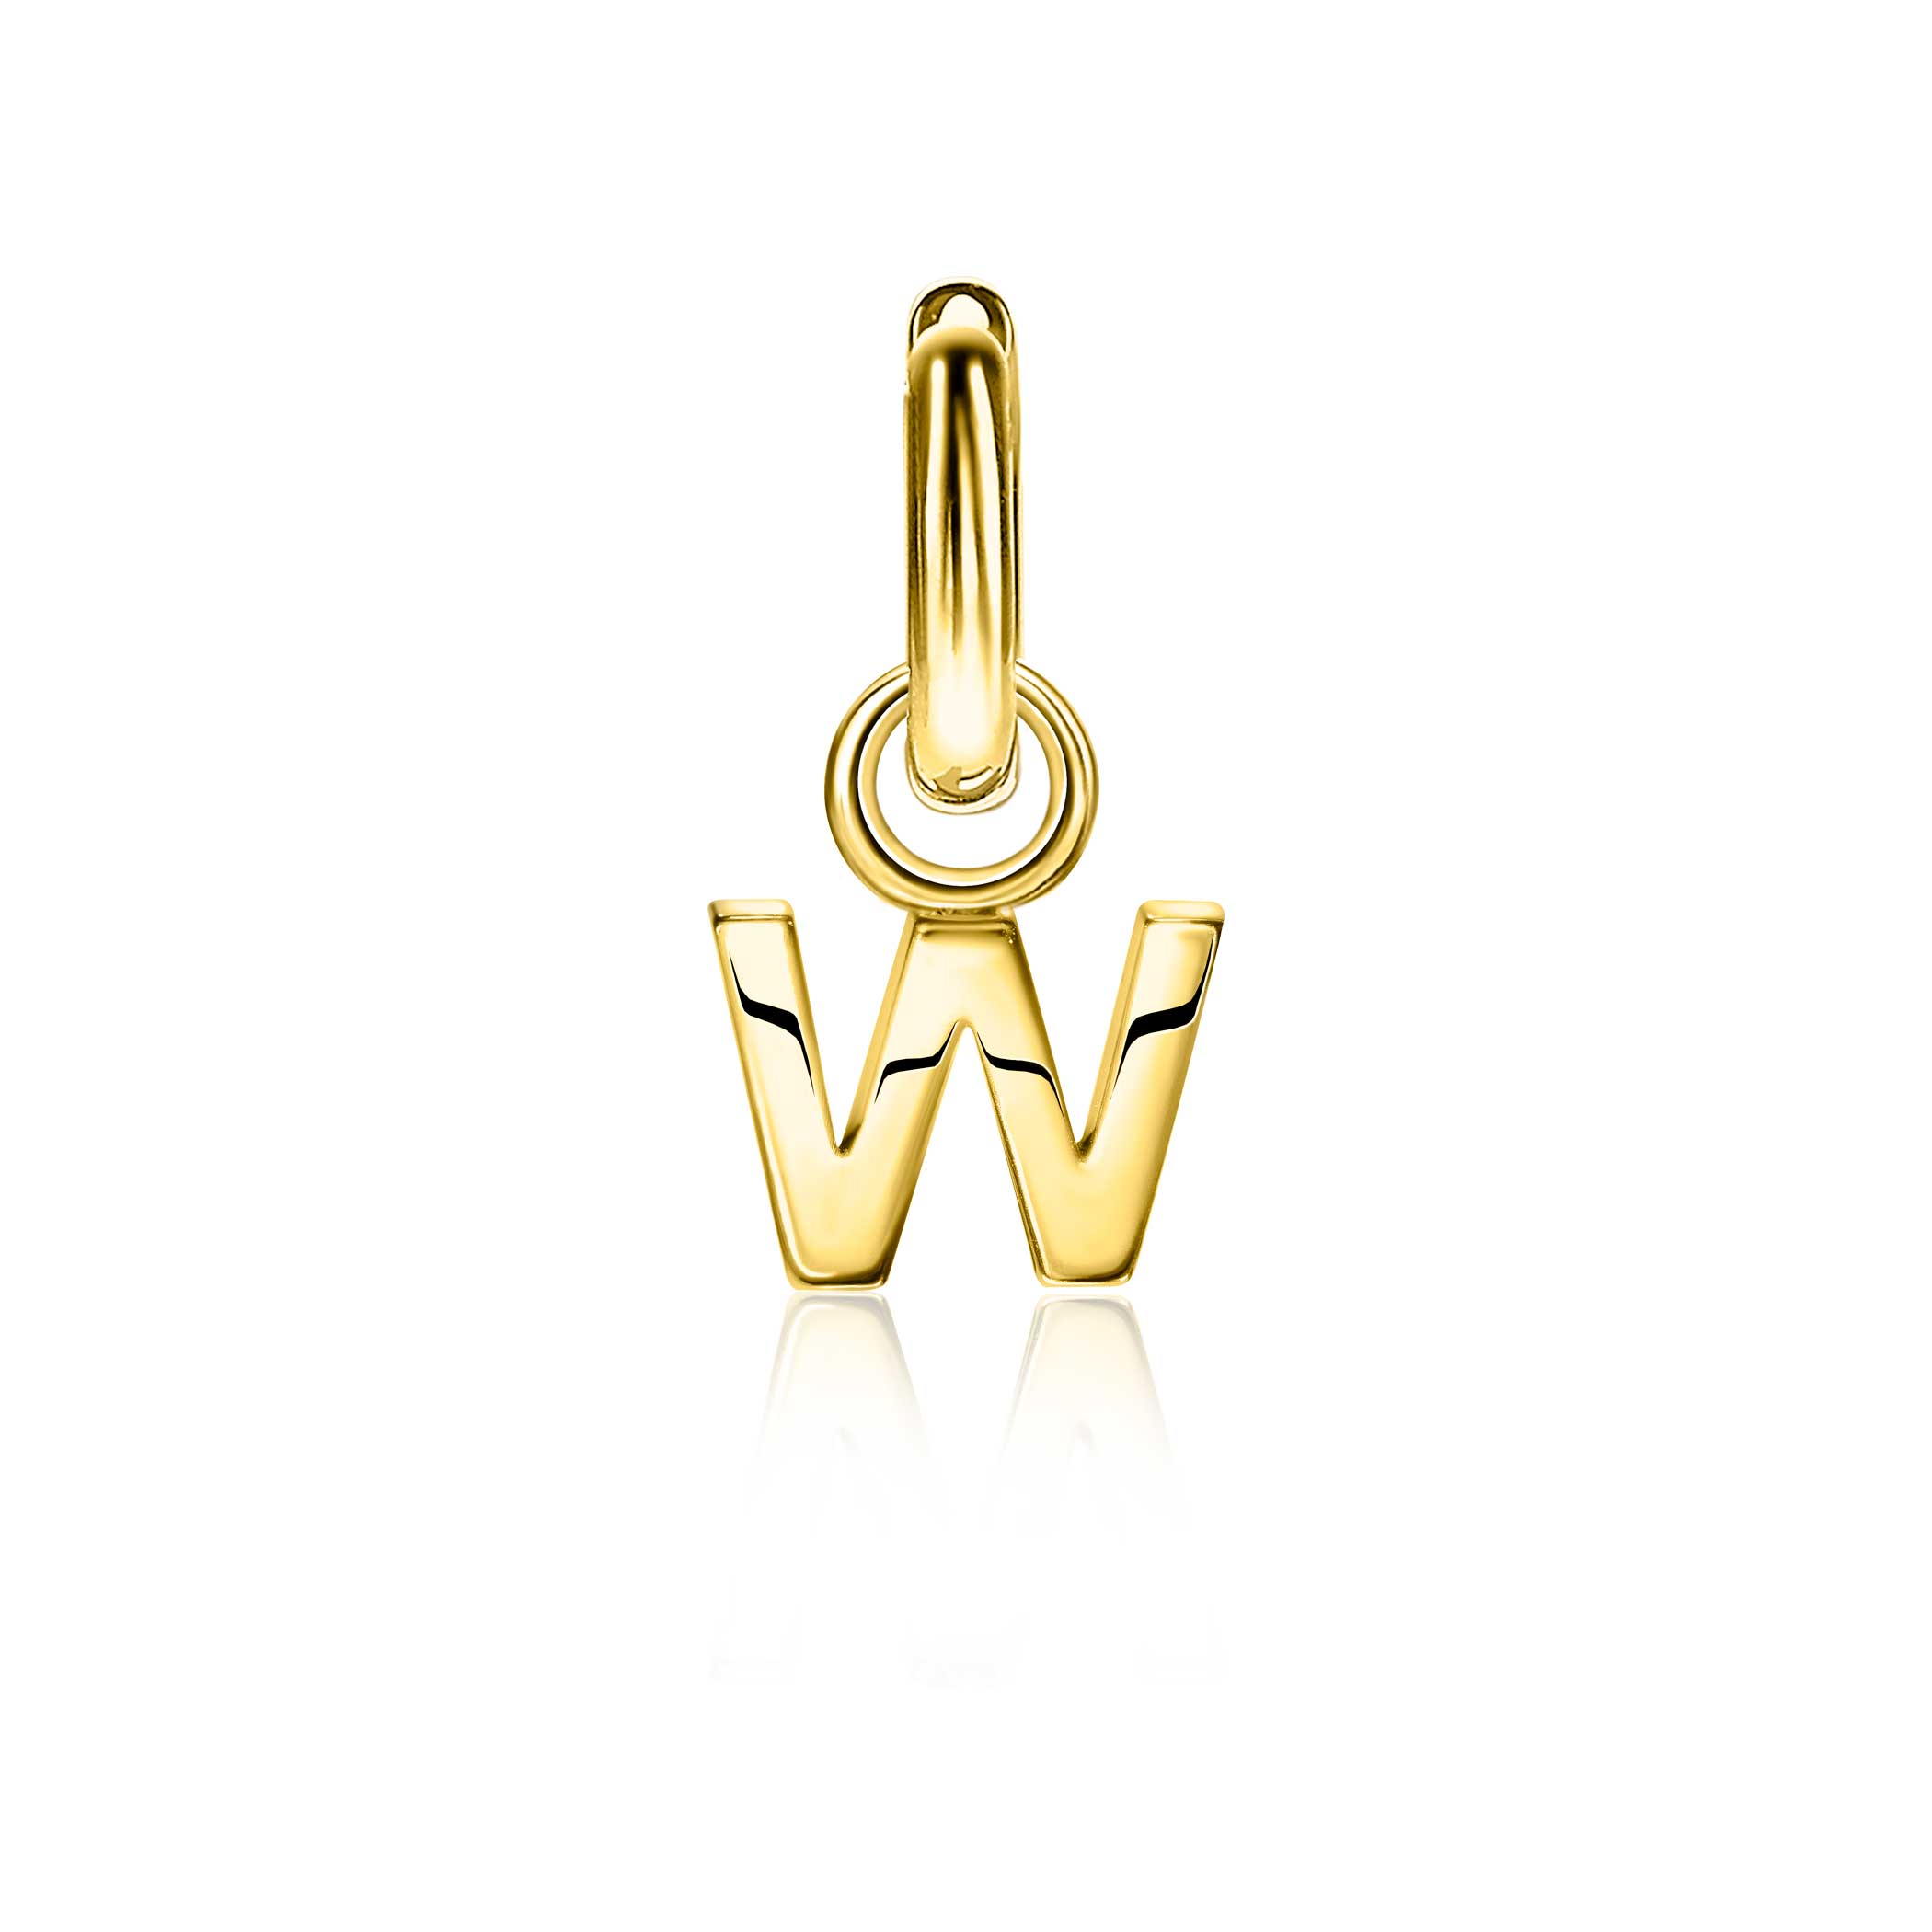 ZINZI Gold Plated Letter Earrings Pendant W price per piece ZICH2145W (excl. hoop earrings)